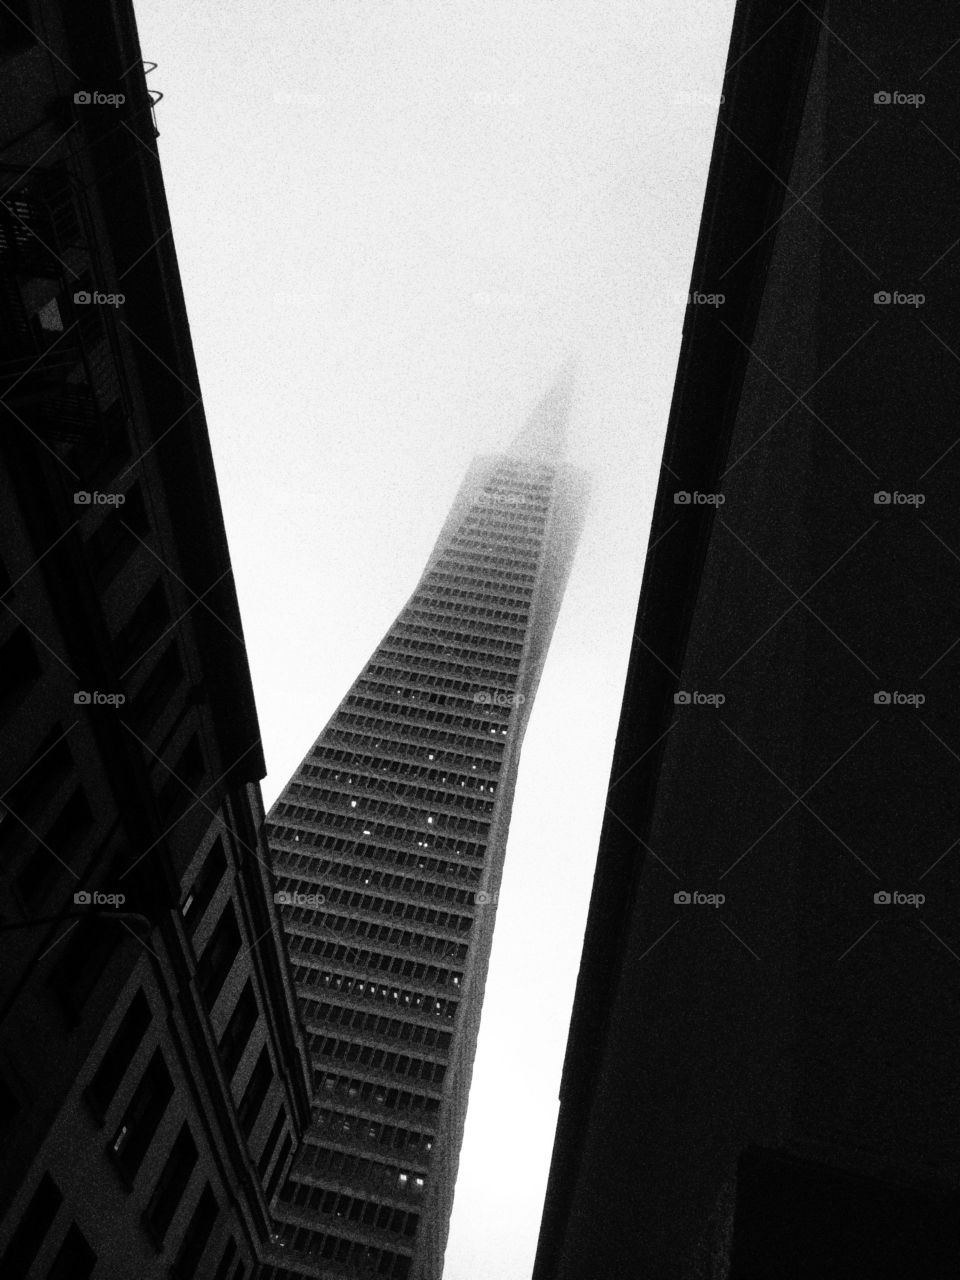 Black and white photo of the Trans America Pyramid San Francisco CA